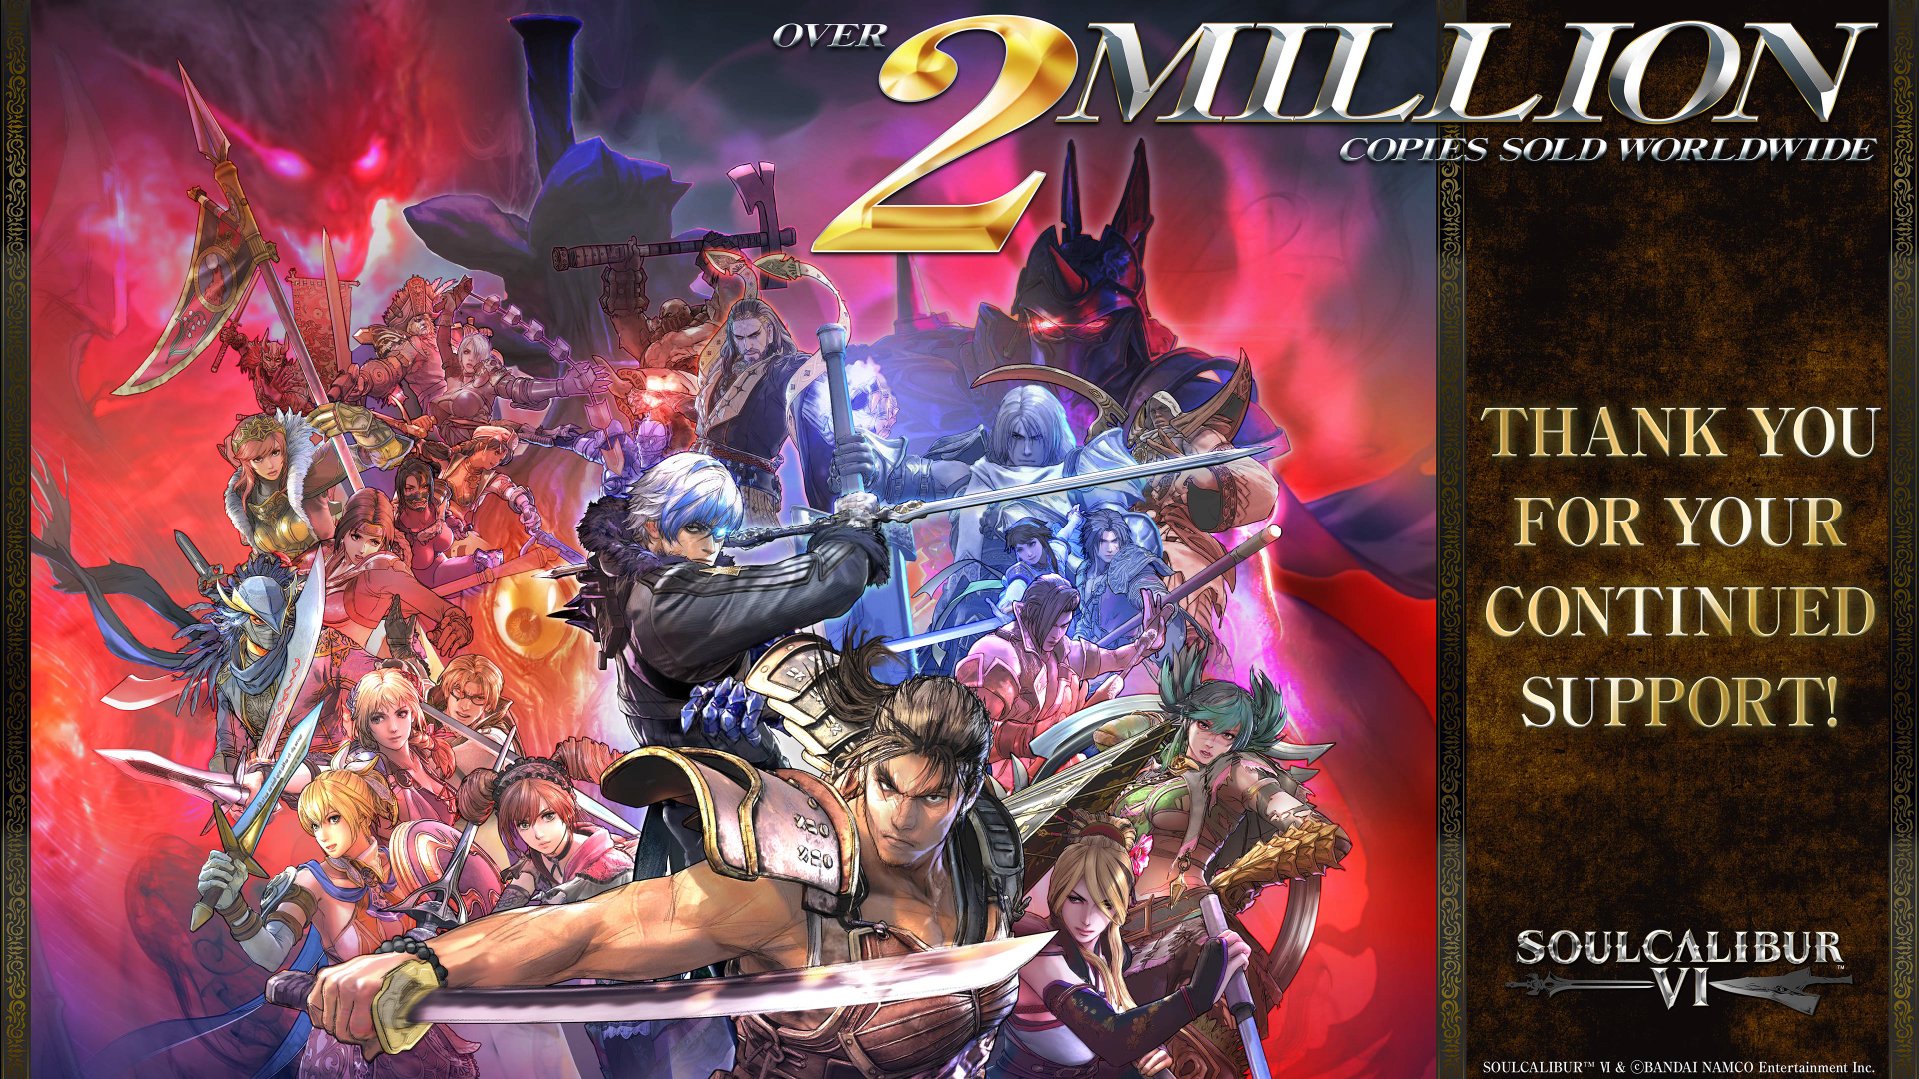 Soulcalibur VI has sold over two million copies